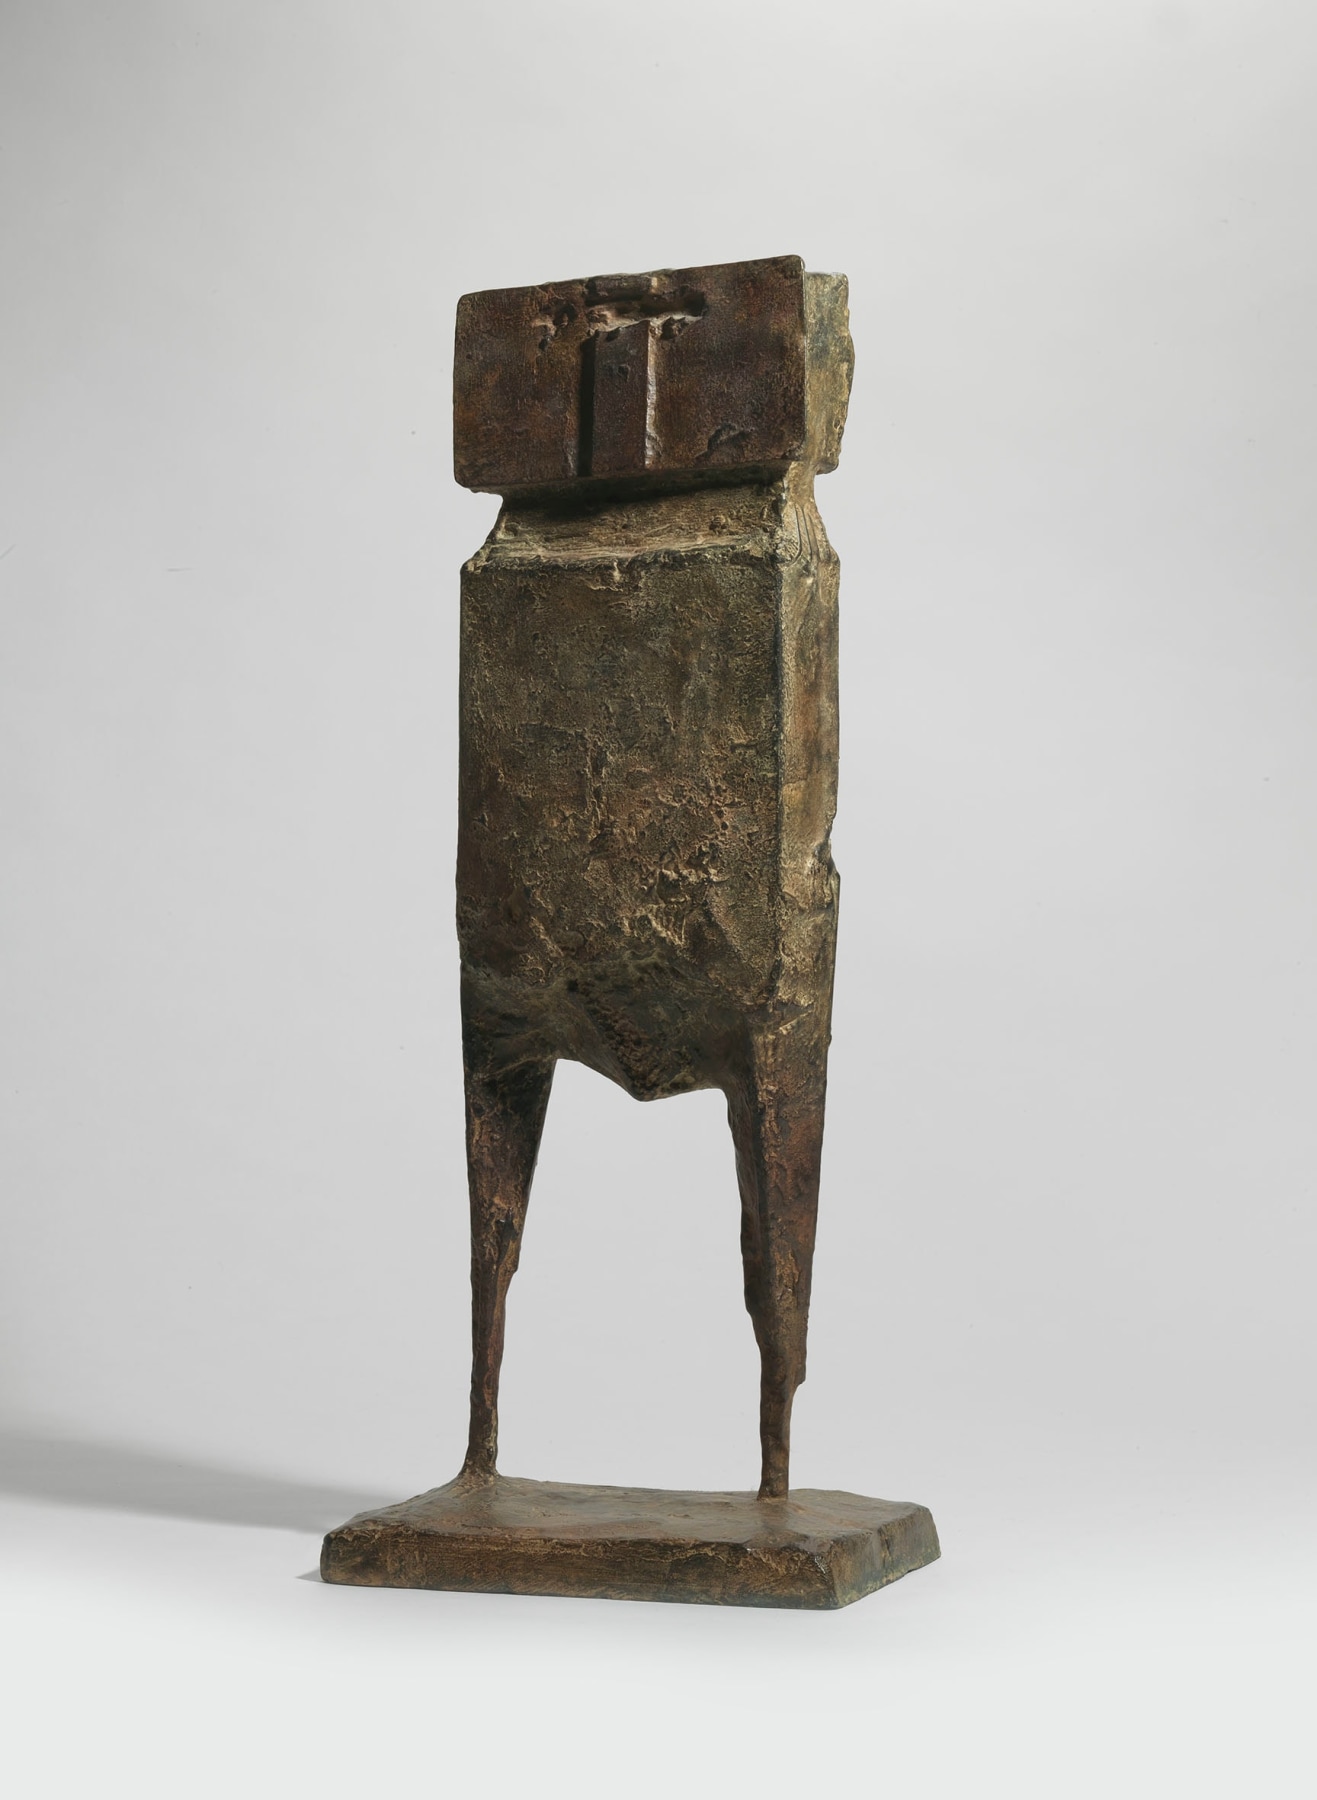 Lynn Chadwick, Aga Cant - Old Watcher, 1959, Bronze ,58 by 24 by 16.5 cm (23 by 9 &frac12; by 6 &frac12; in.)